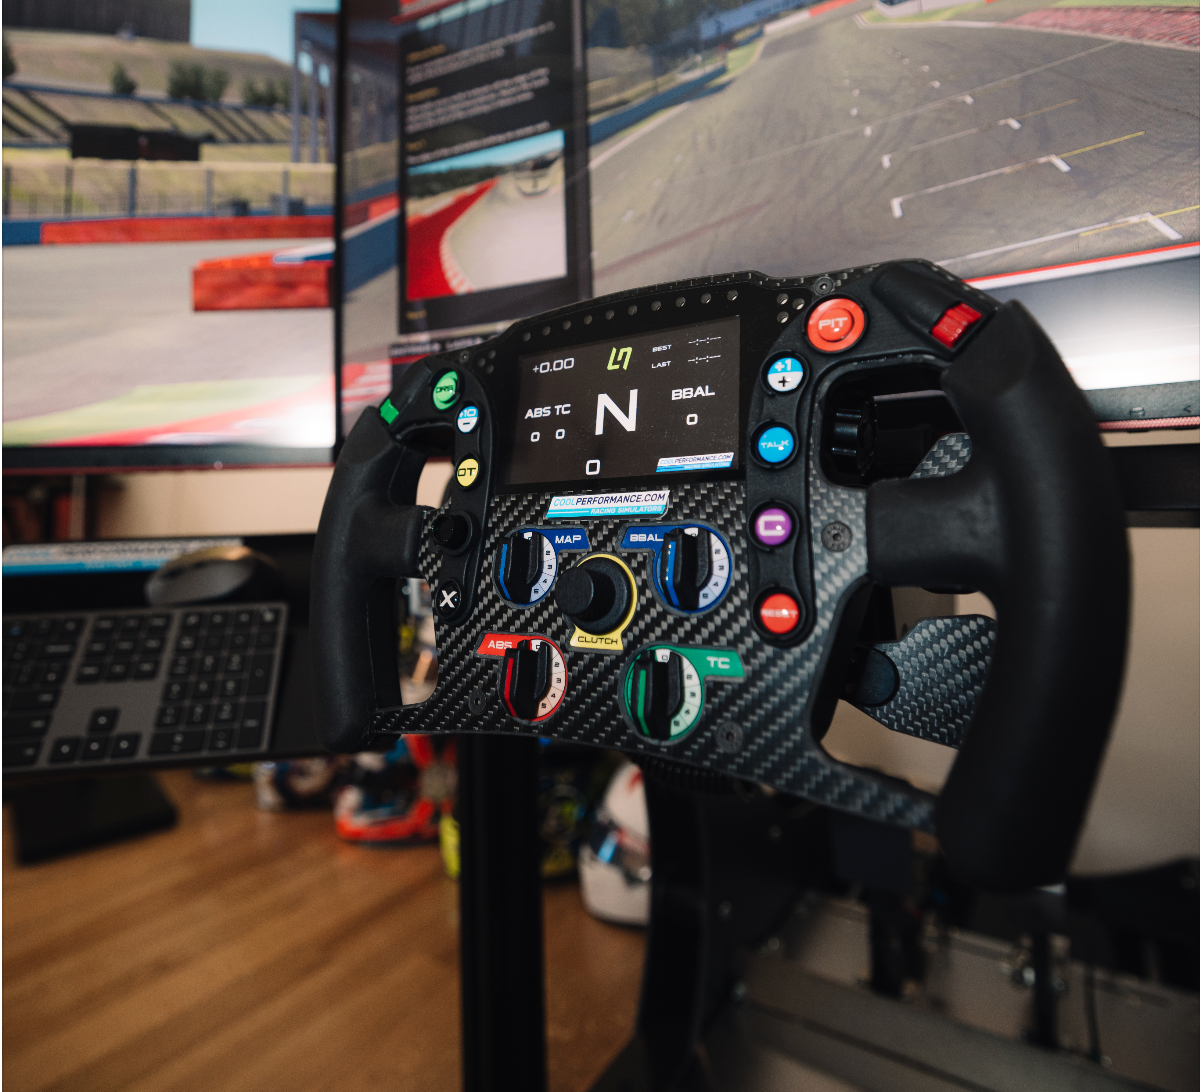 Cool Performance Stickers | Cool Performance Racing Simulators